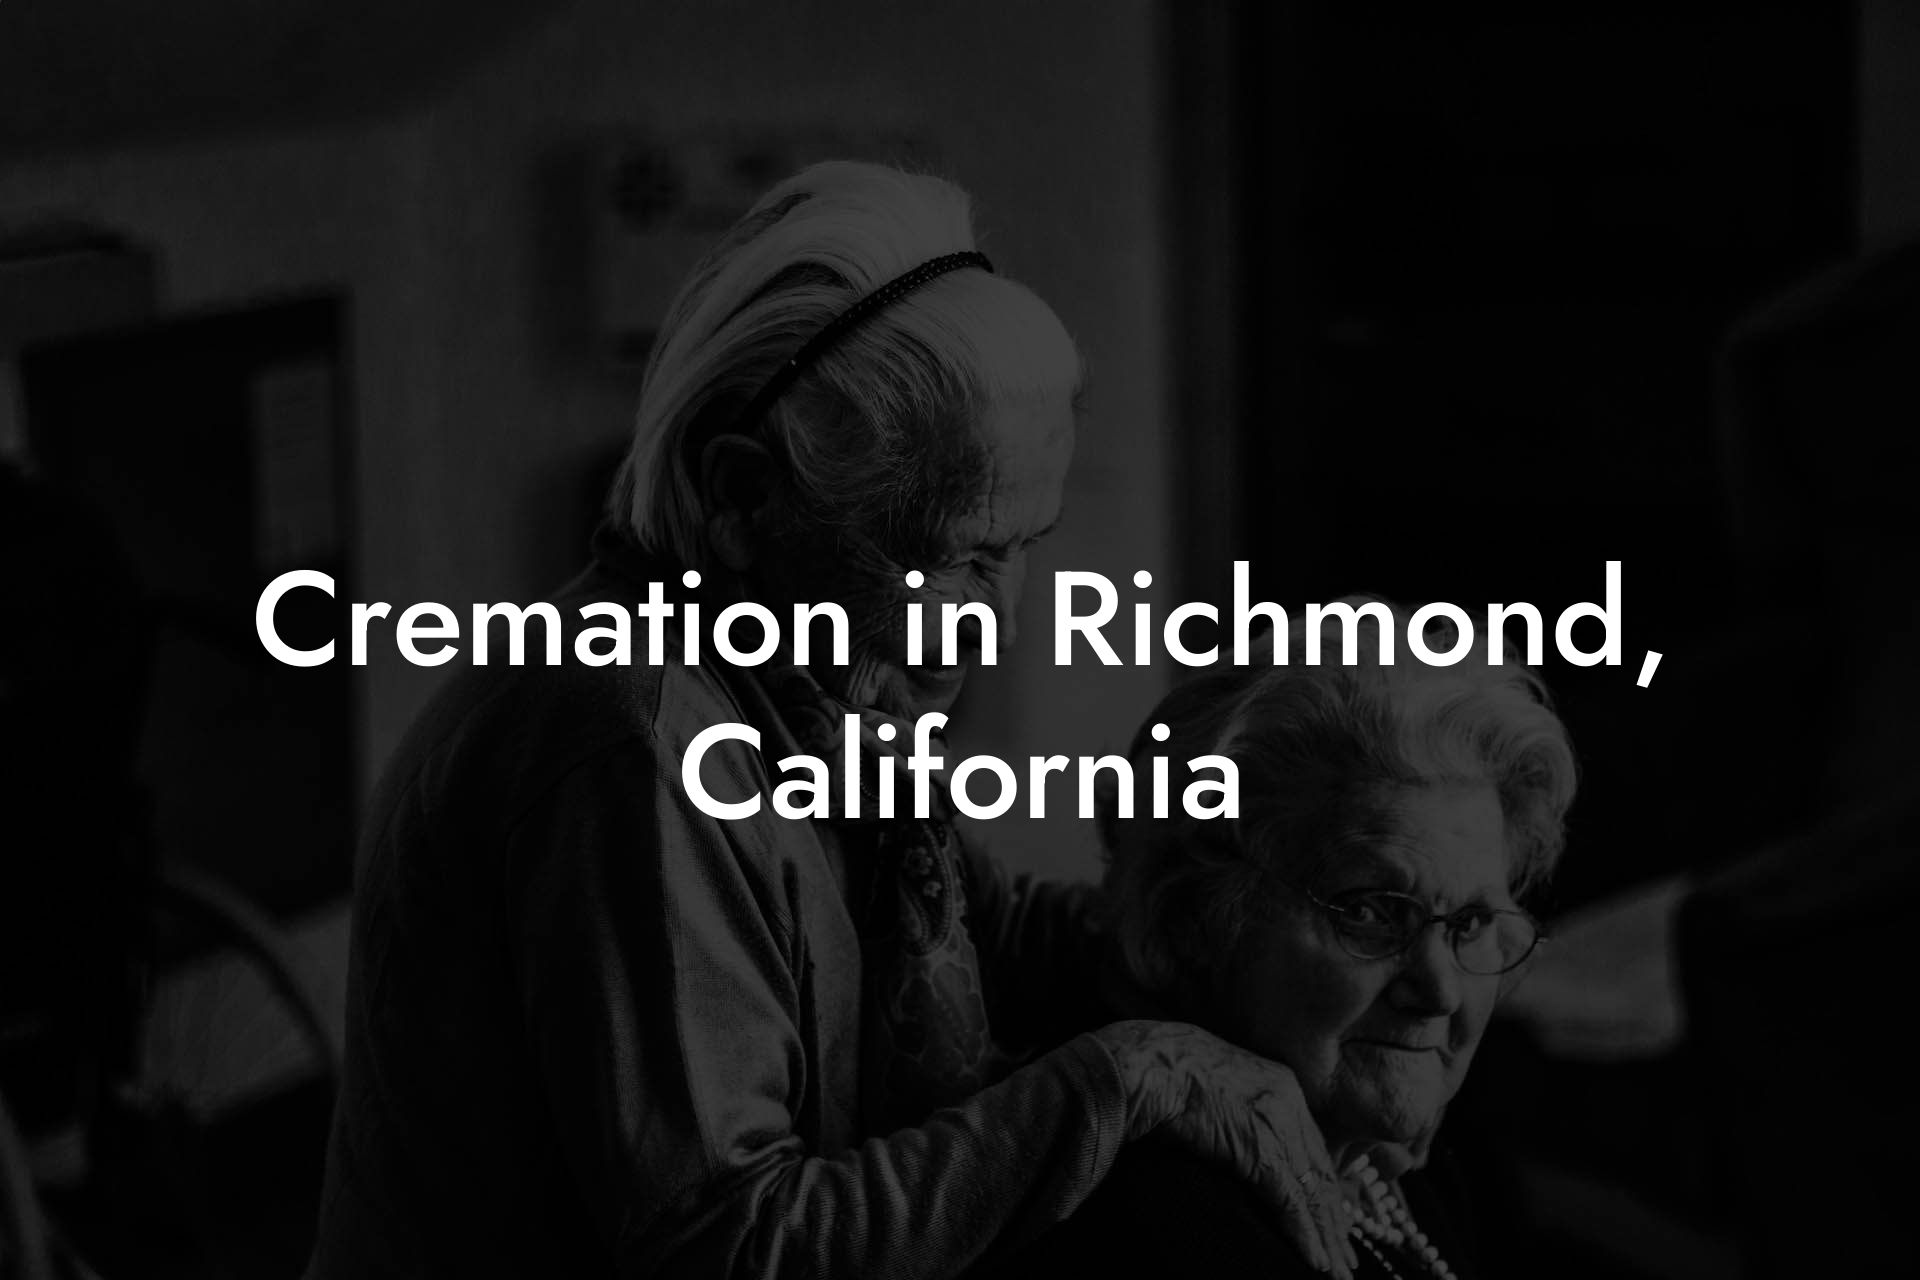 Cremation in Richmond, California